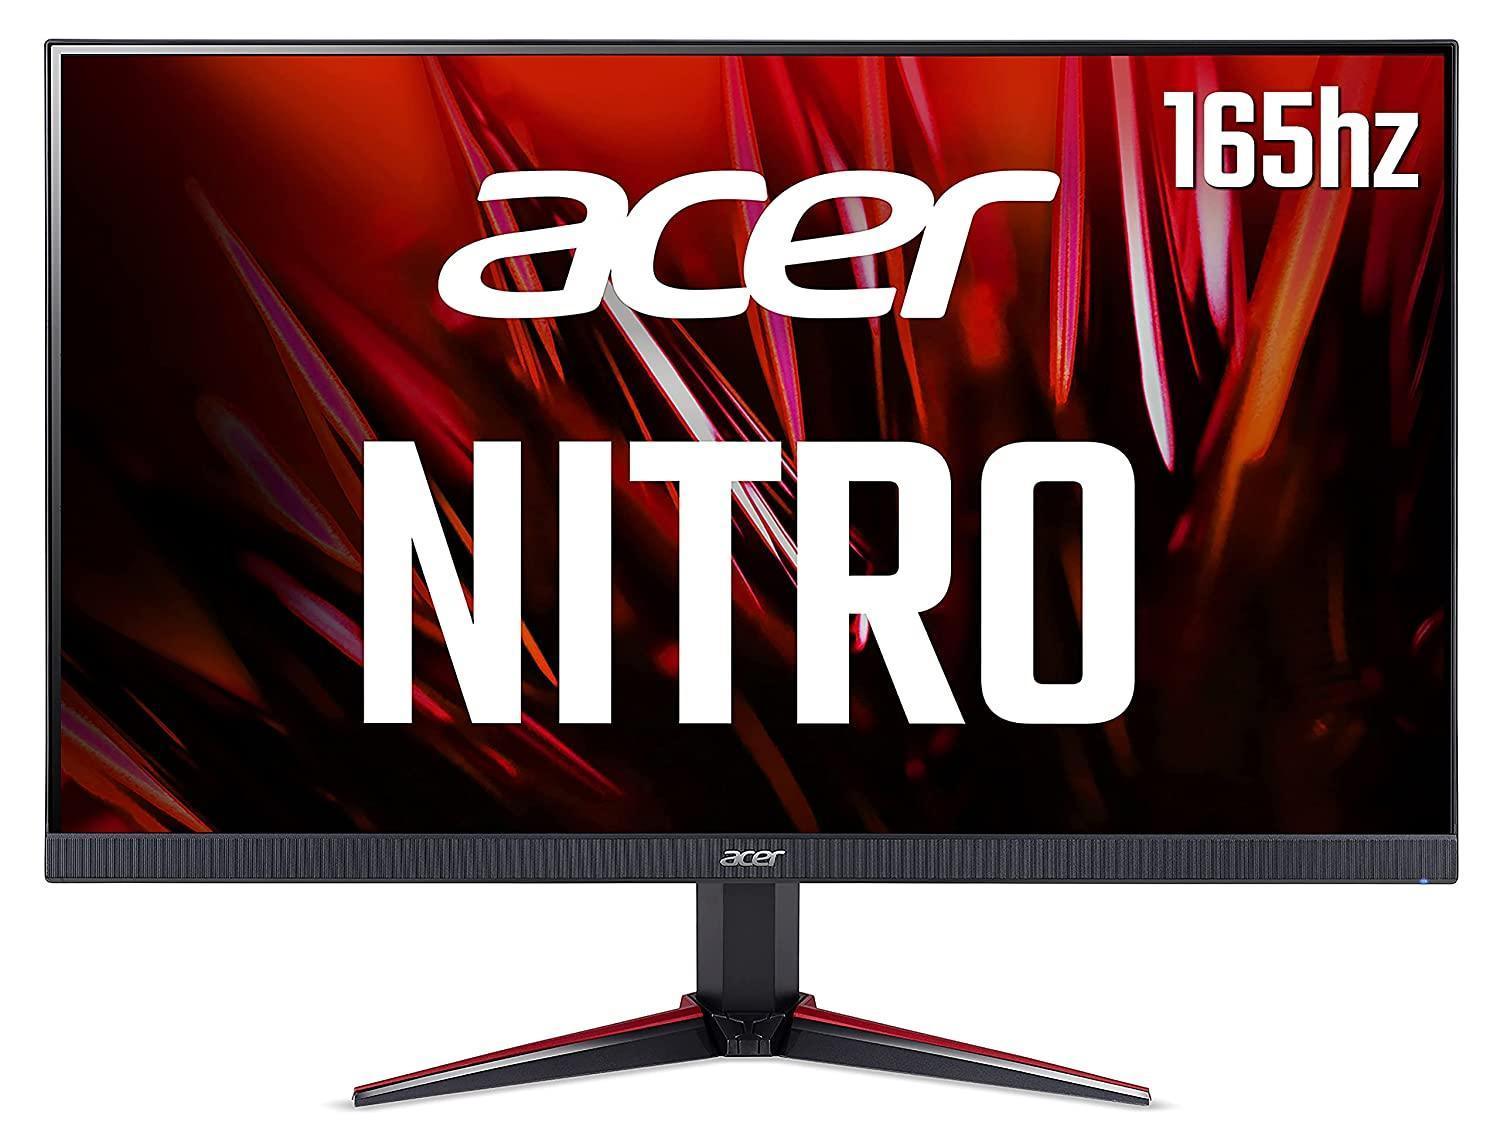 Acer Nitro VG270 S 27 Inch Full HD (1920 x 1080) IPS Gaming Monitor I 0.5 MS Response Time I 165Hz Refresh Rate I